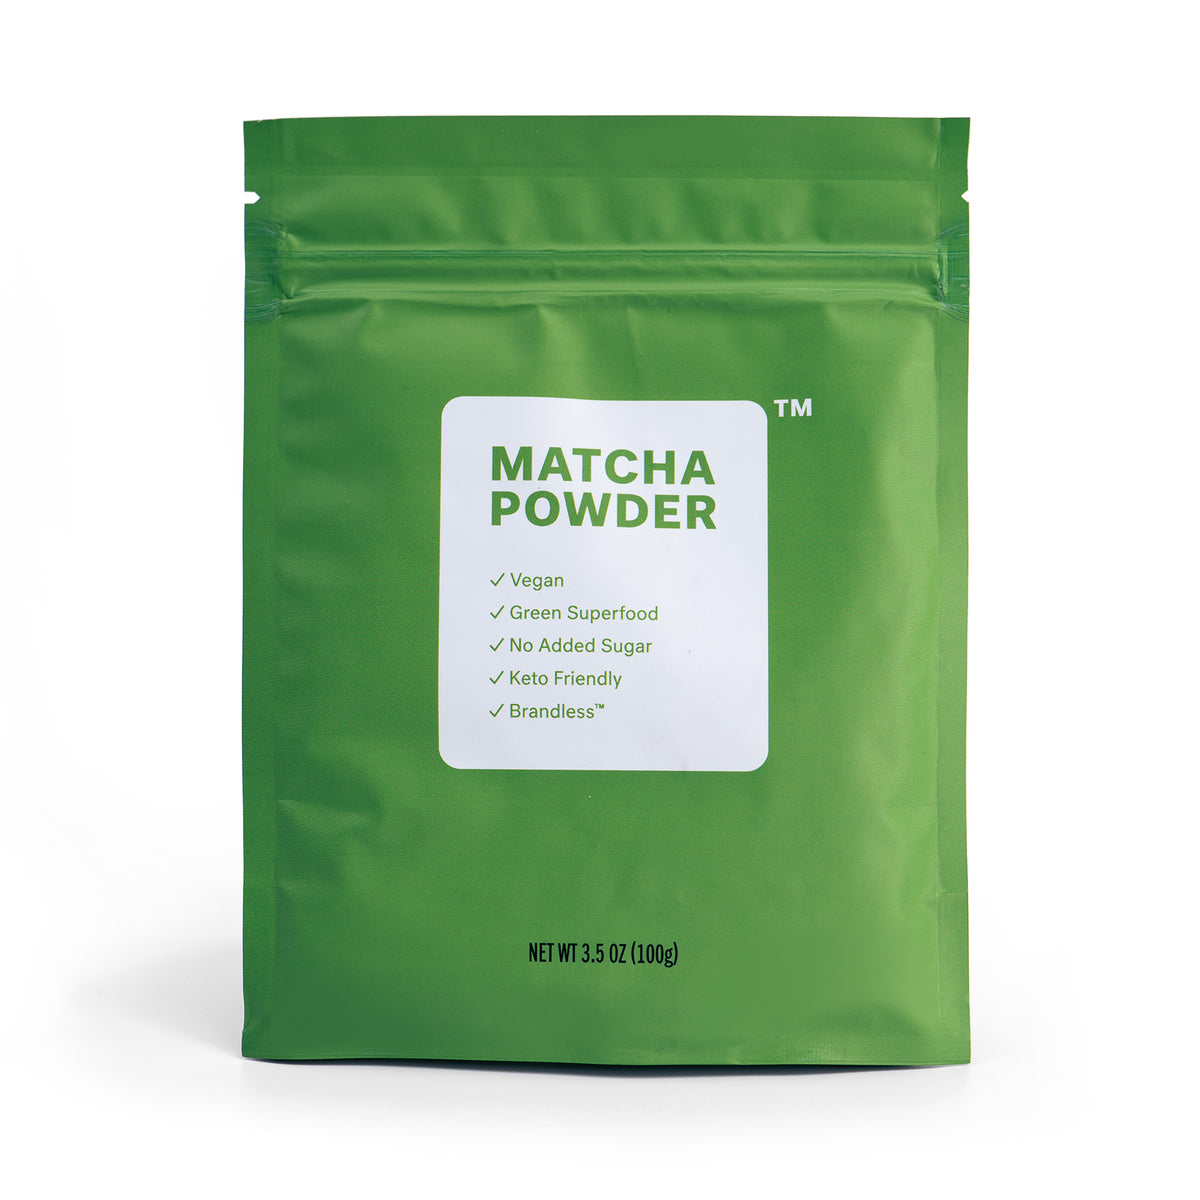 Matcha powder. Product photo of bag. Vegan, Green Superfood, No Added Sugar, Keto Friendly, Brandless. Net weight 3.5oz (100g).